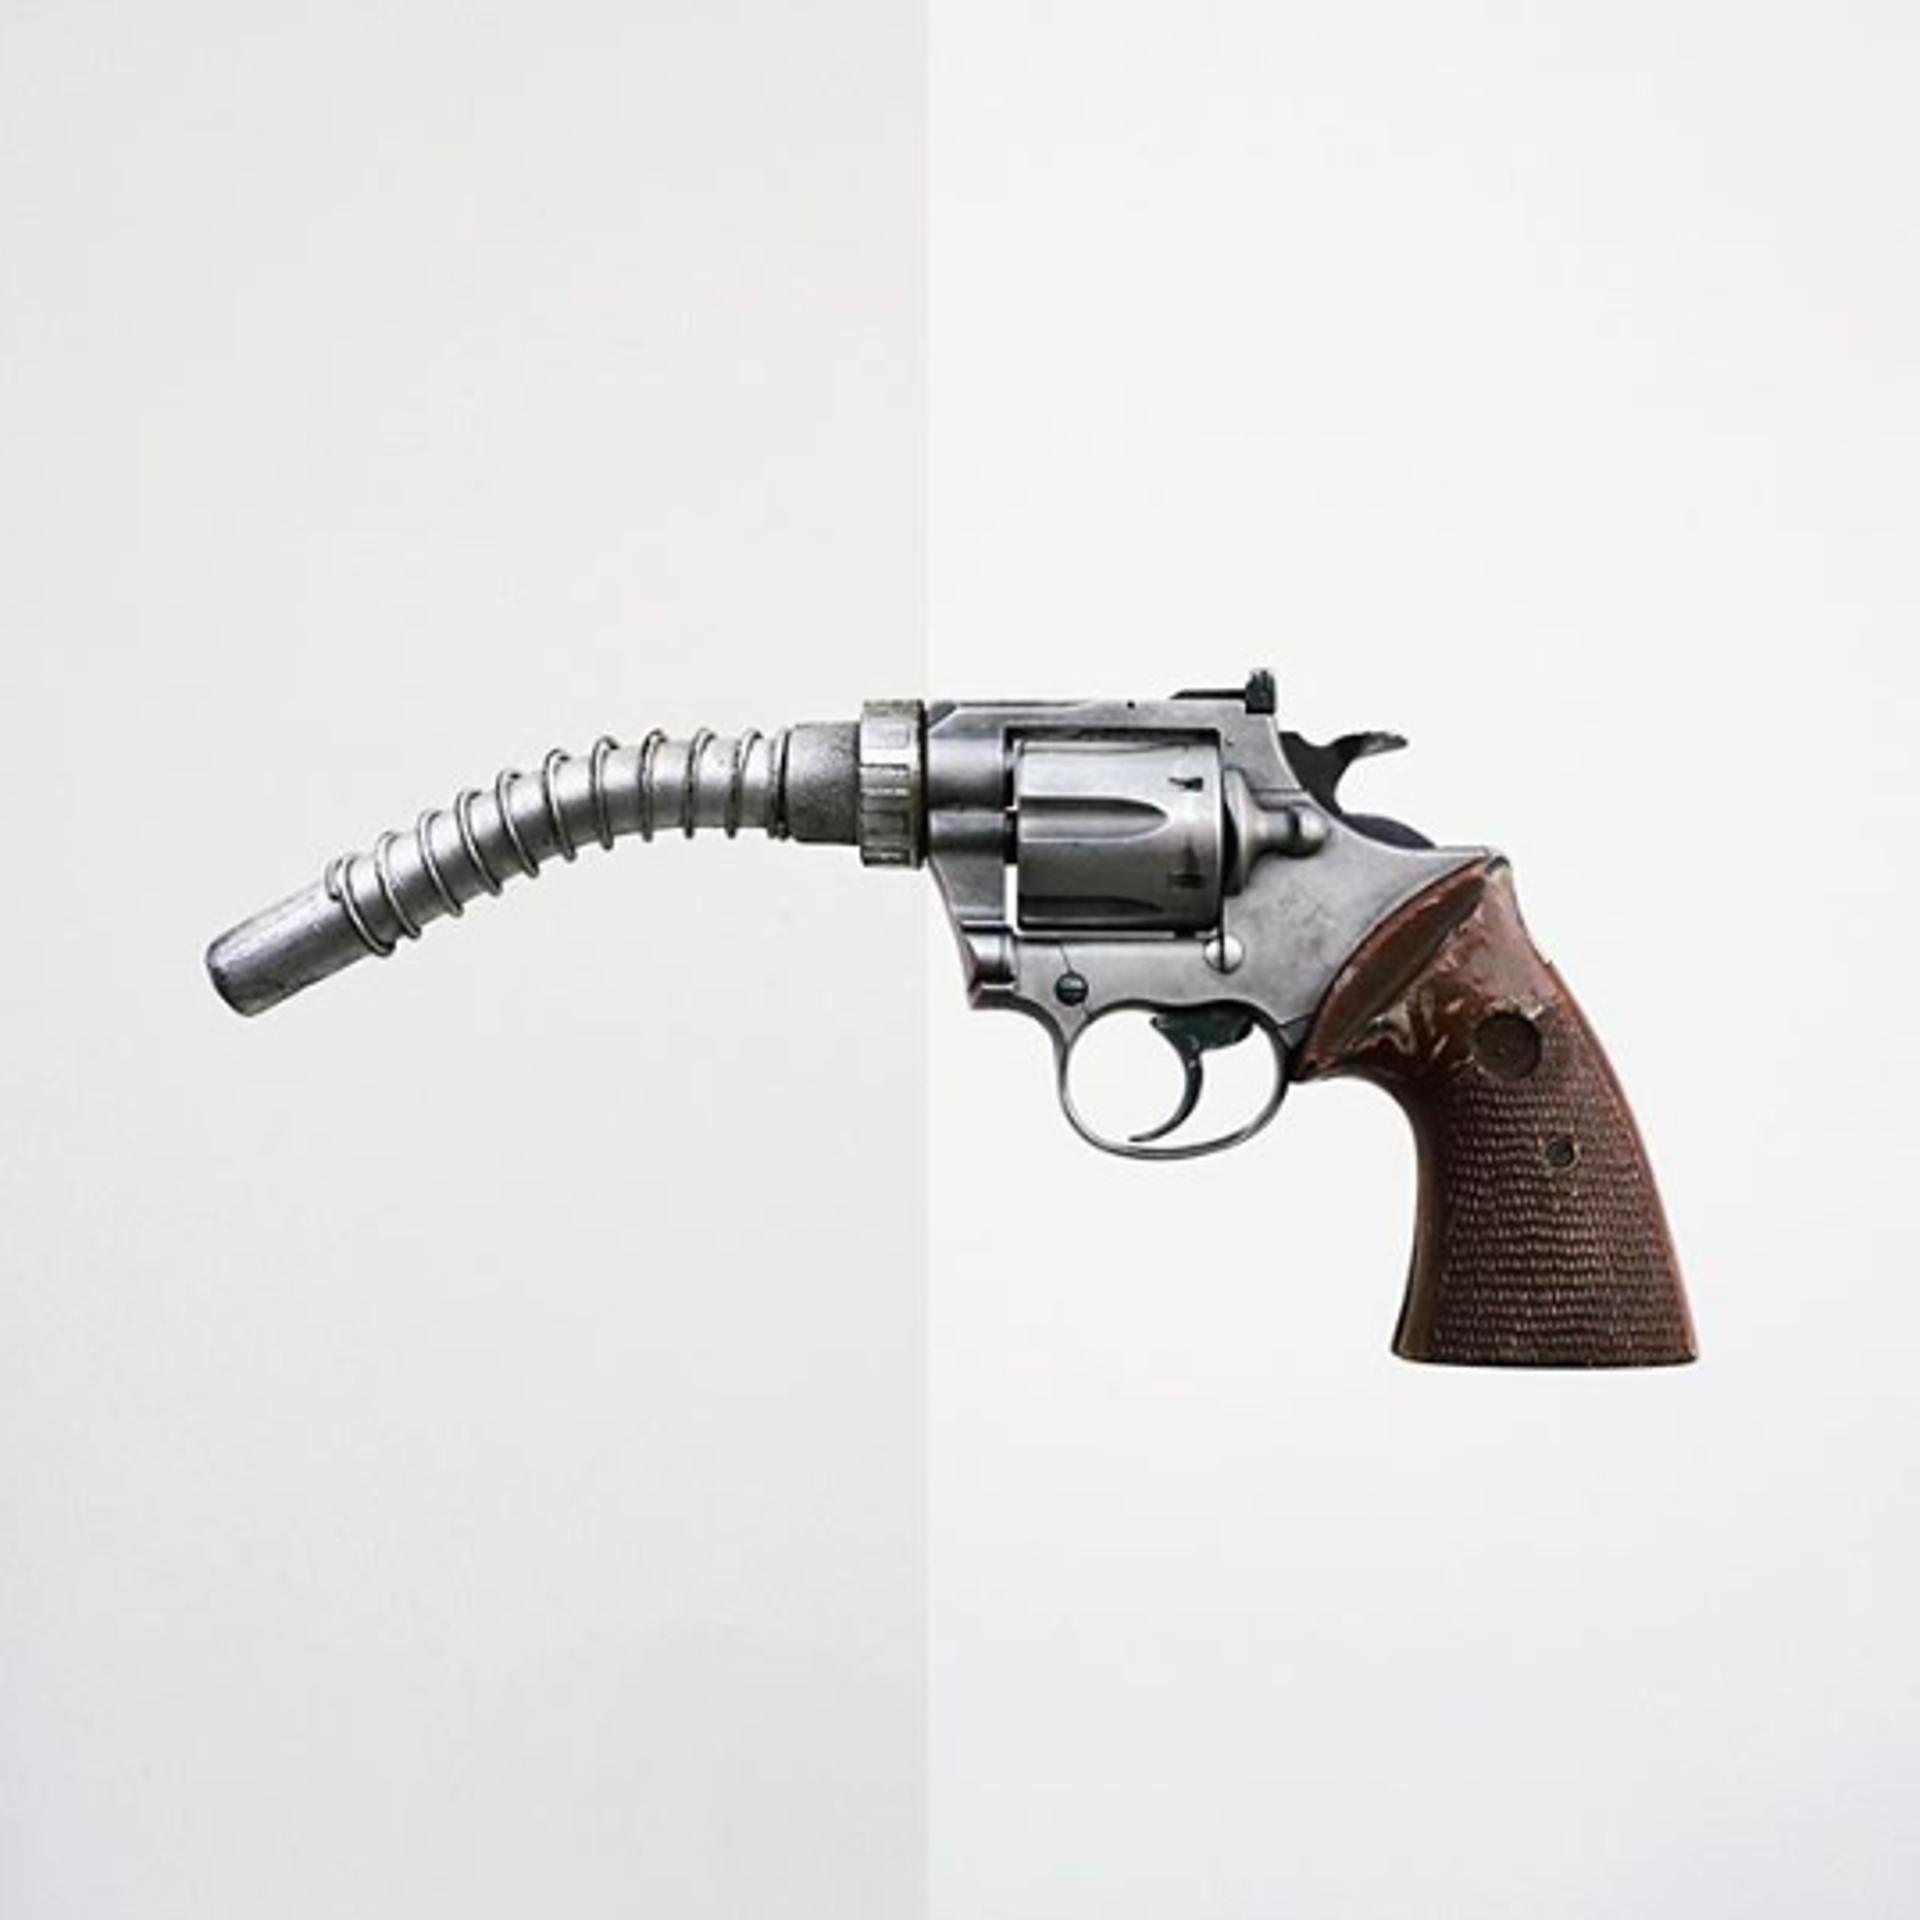 Gun + Gas Nozzle by Stephen McMennamy